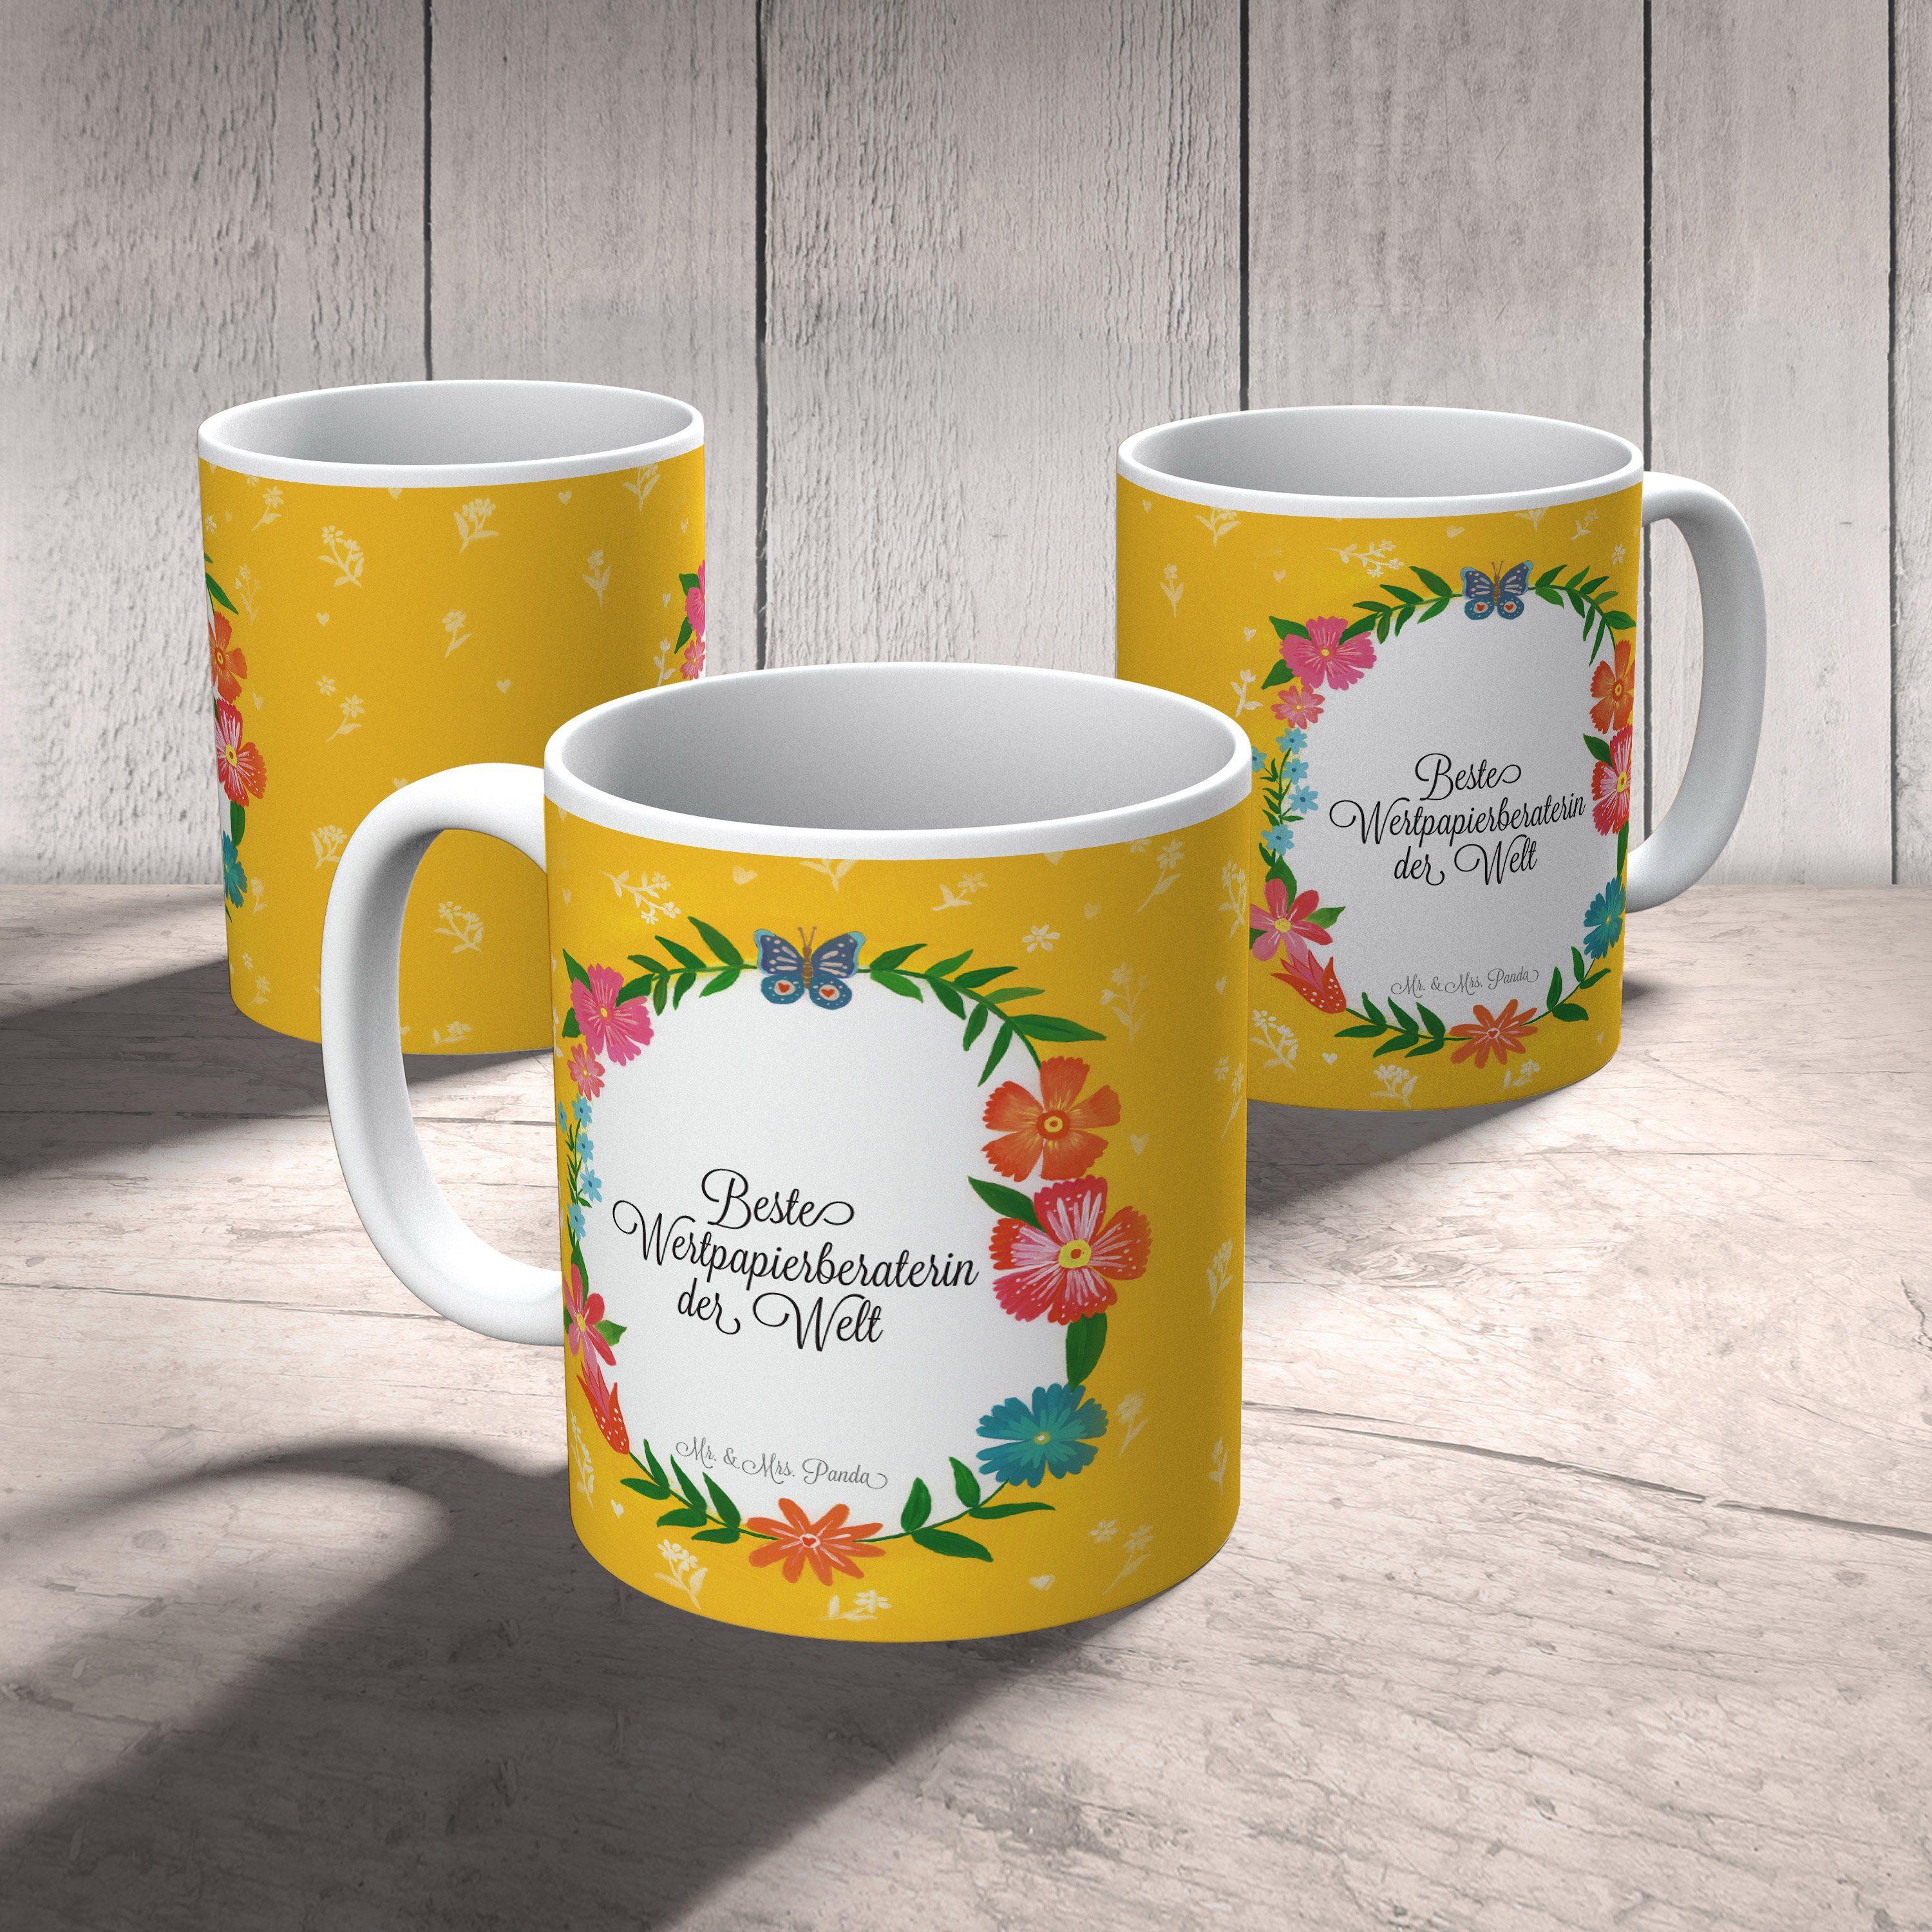 Mr. & Mrs. Panda Tasse Kaffeetasse, Wertpapierberaterin Motive, Tasse Ausbildung, Keramik - Geschenk